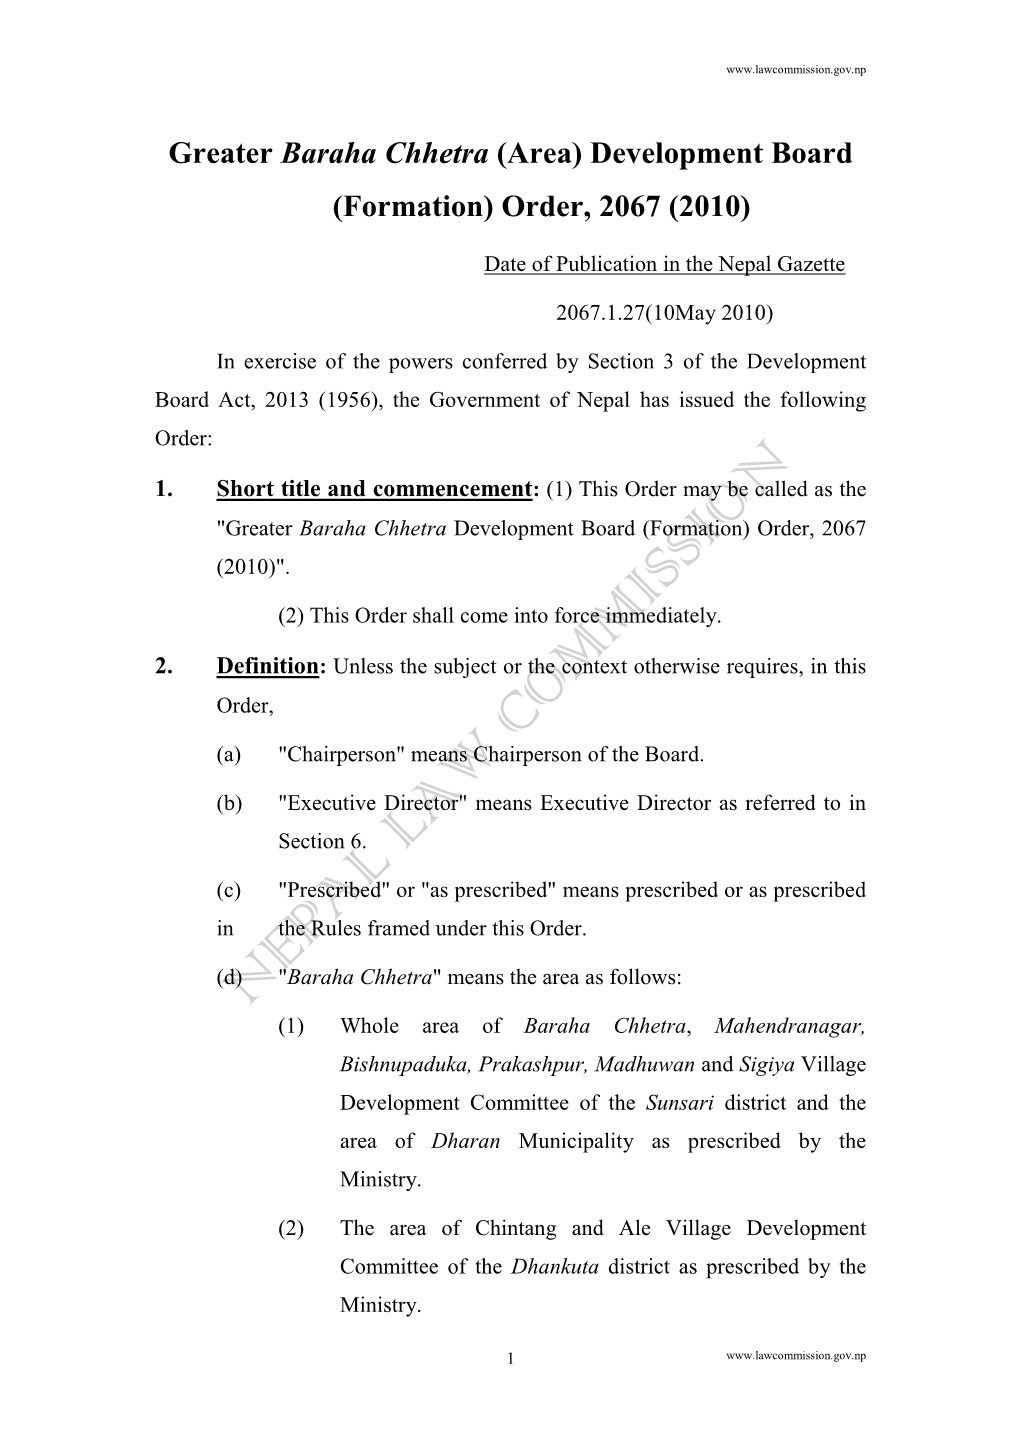 Greater Baraha Chhetra (Area) Development Board (Formation) Order, 2067 (2010)